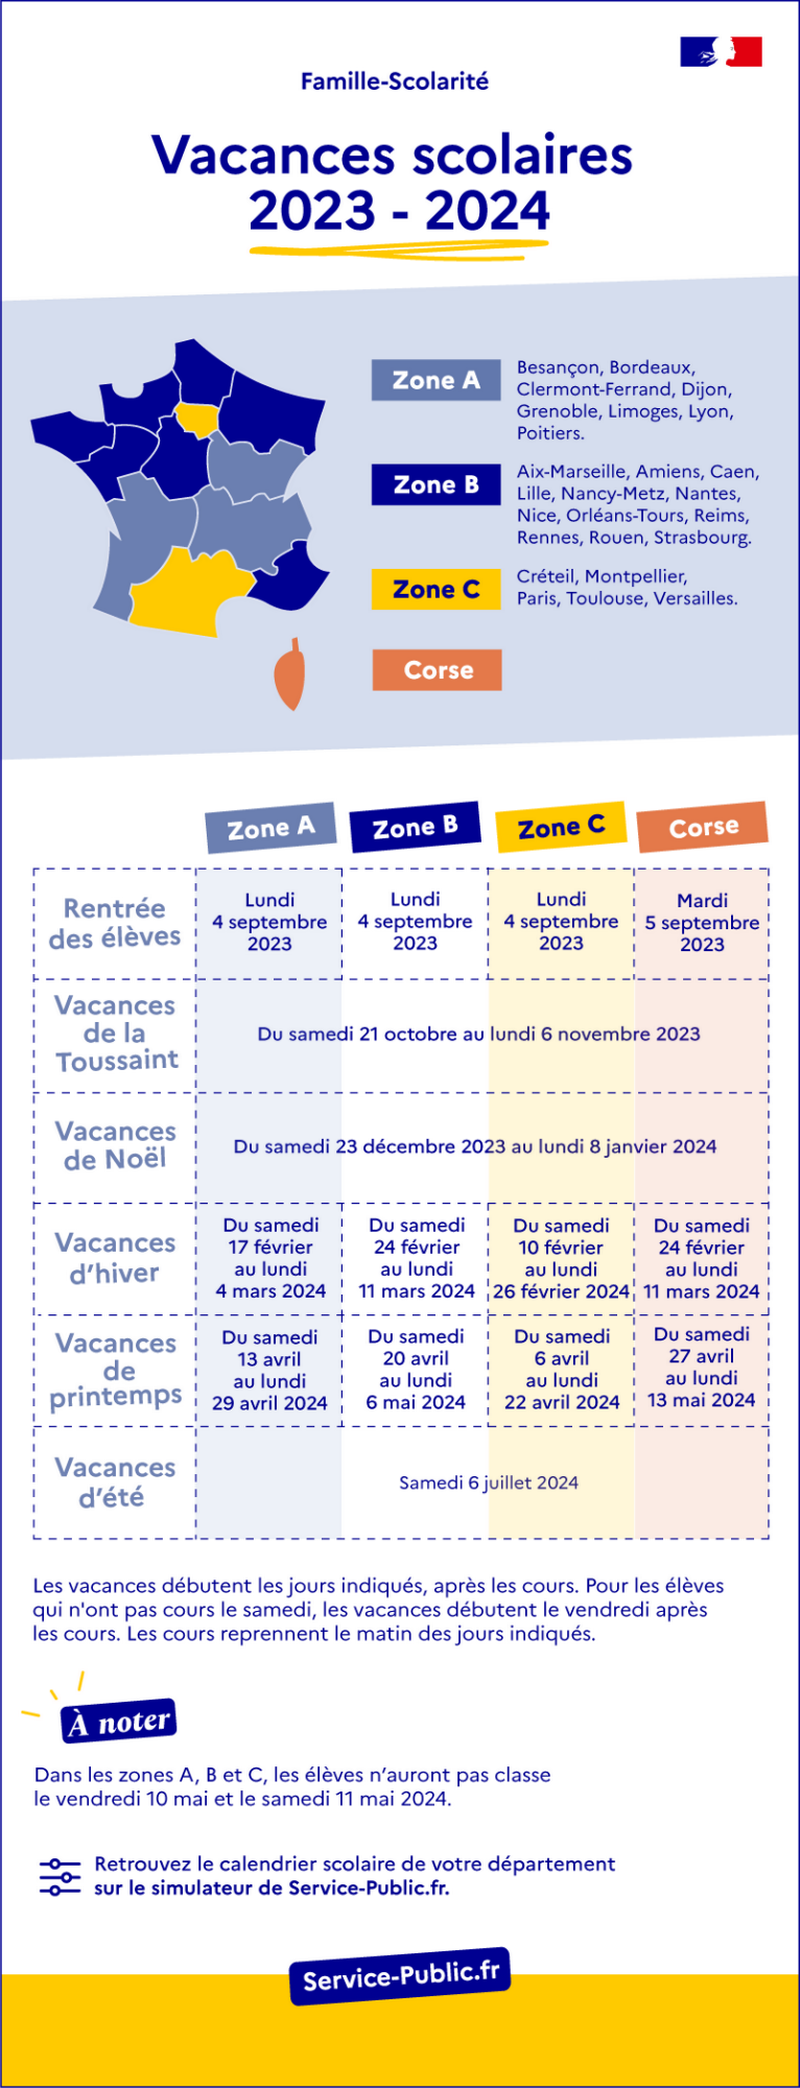 Agenda AOF / Sociétés France - Semaine du lundi 29 janvier 2024